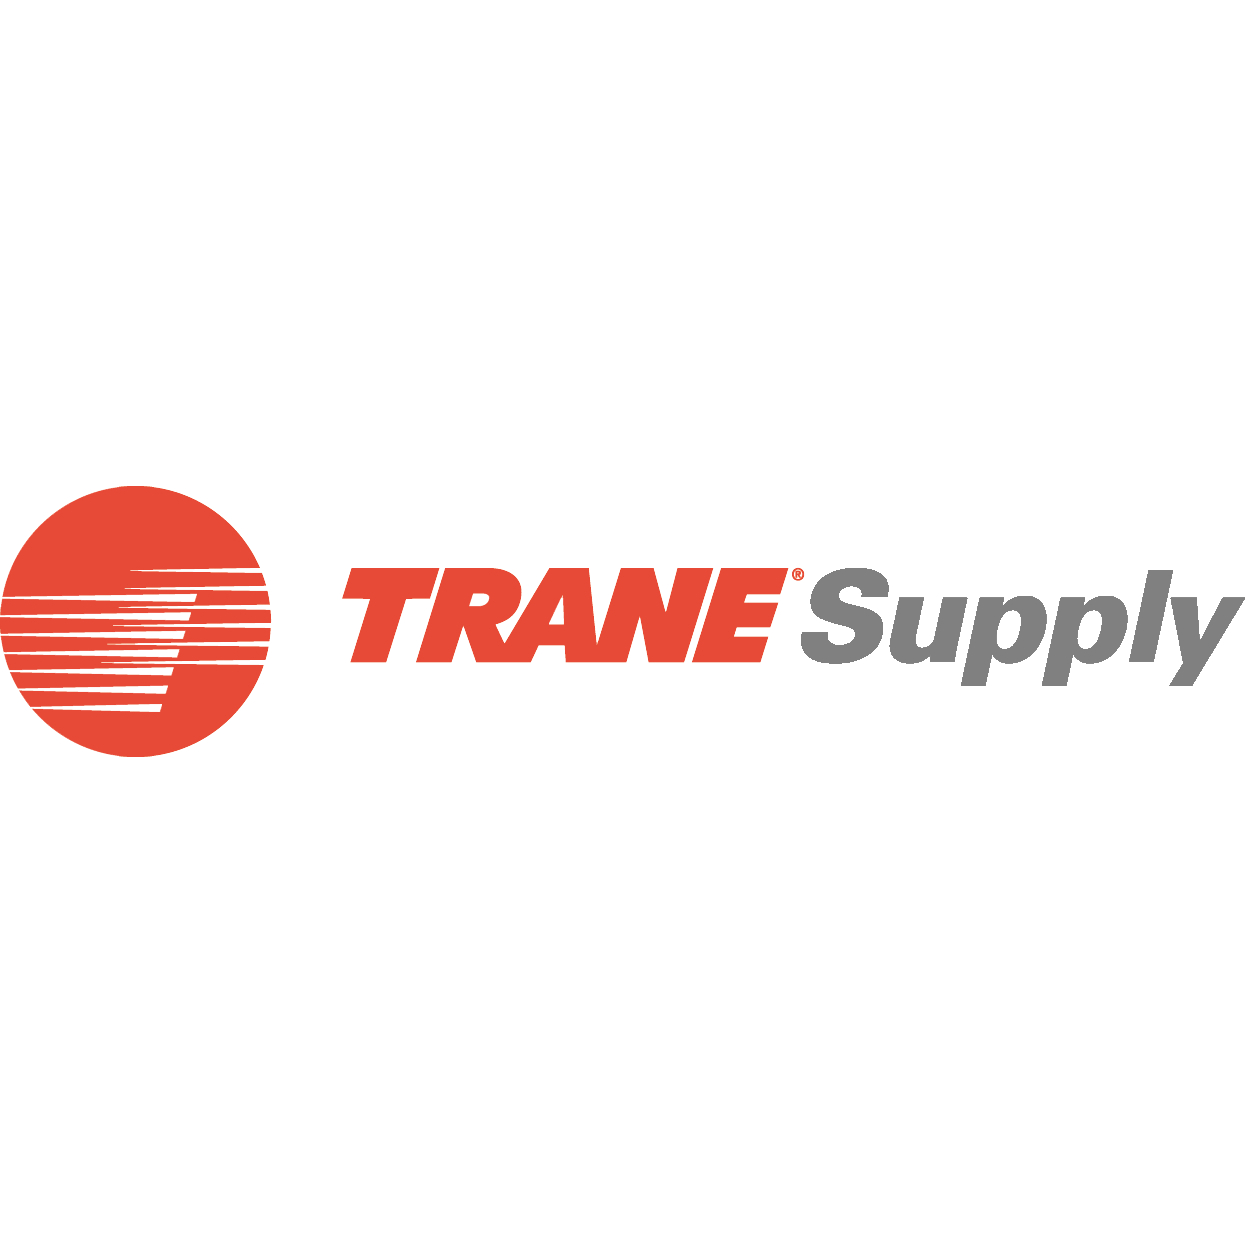 Trane Supply - Heating Systems & Equipment